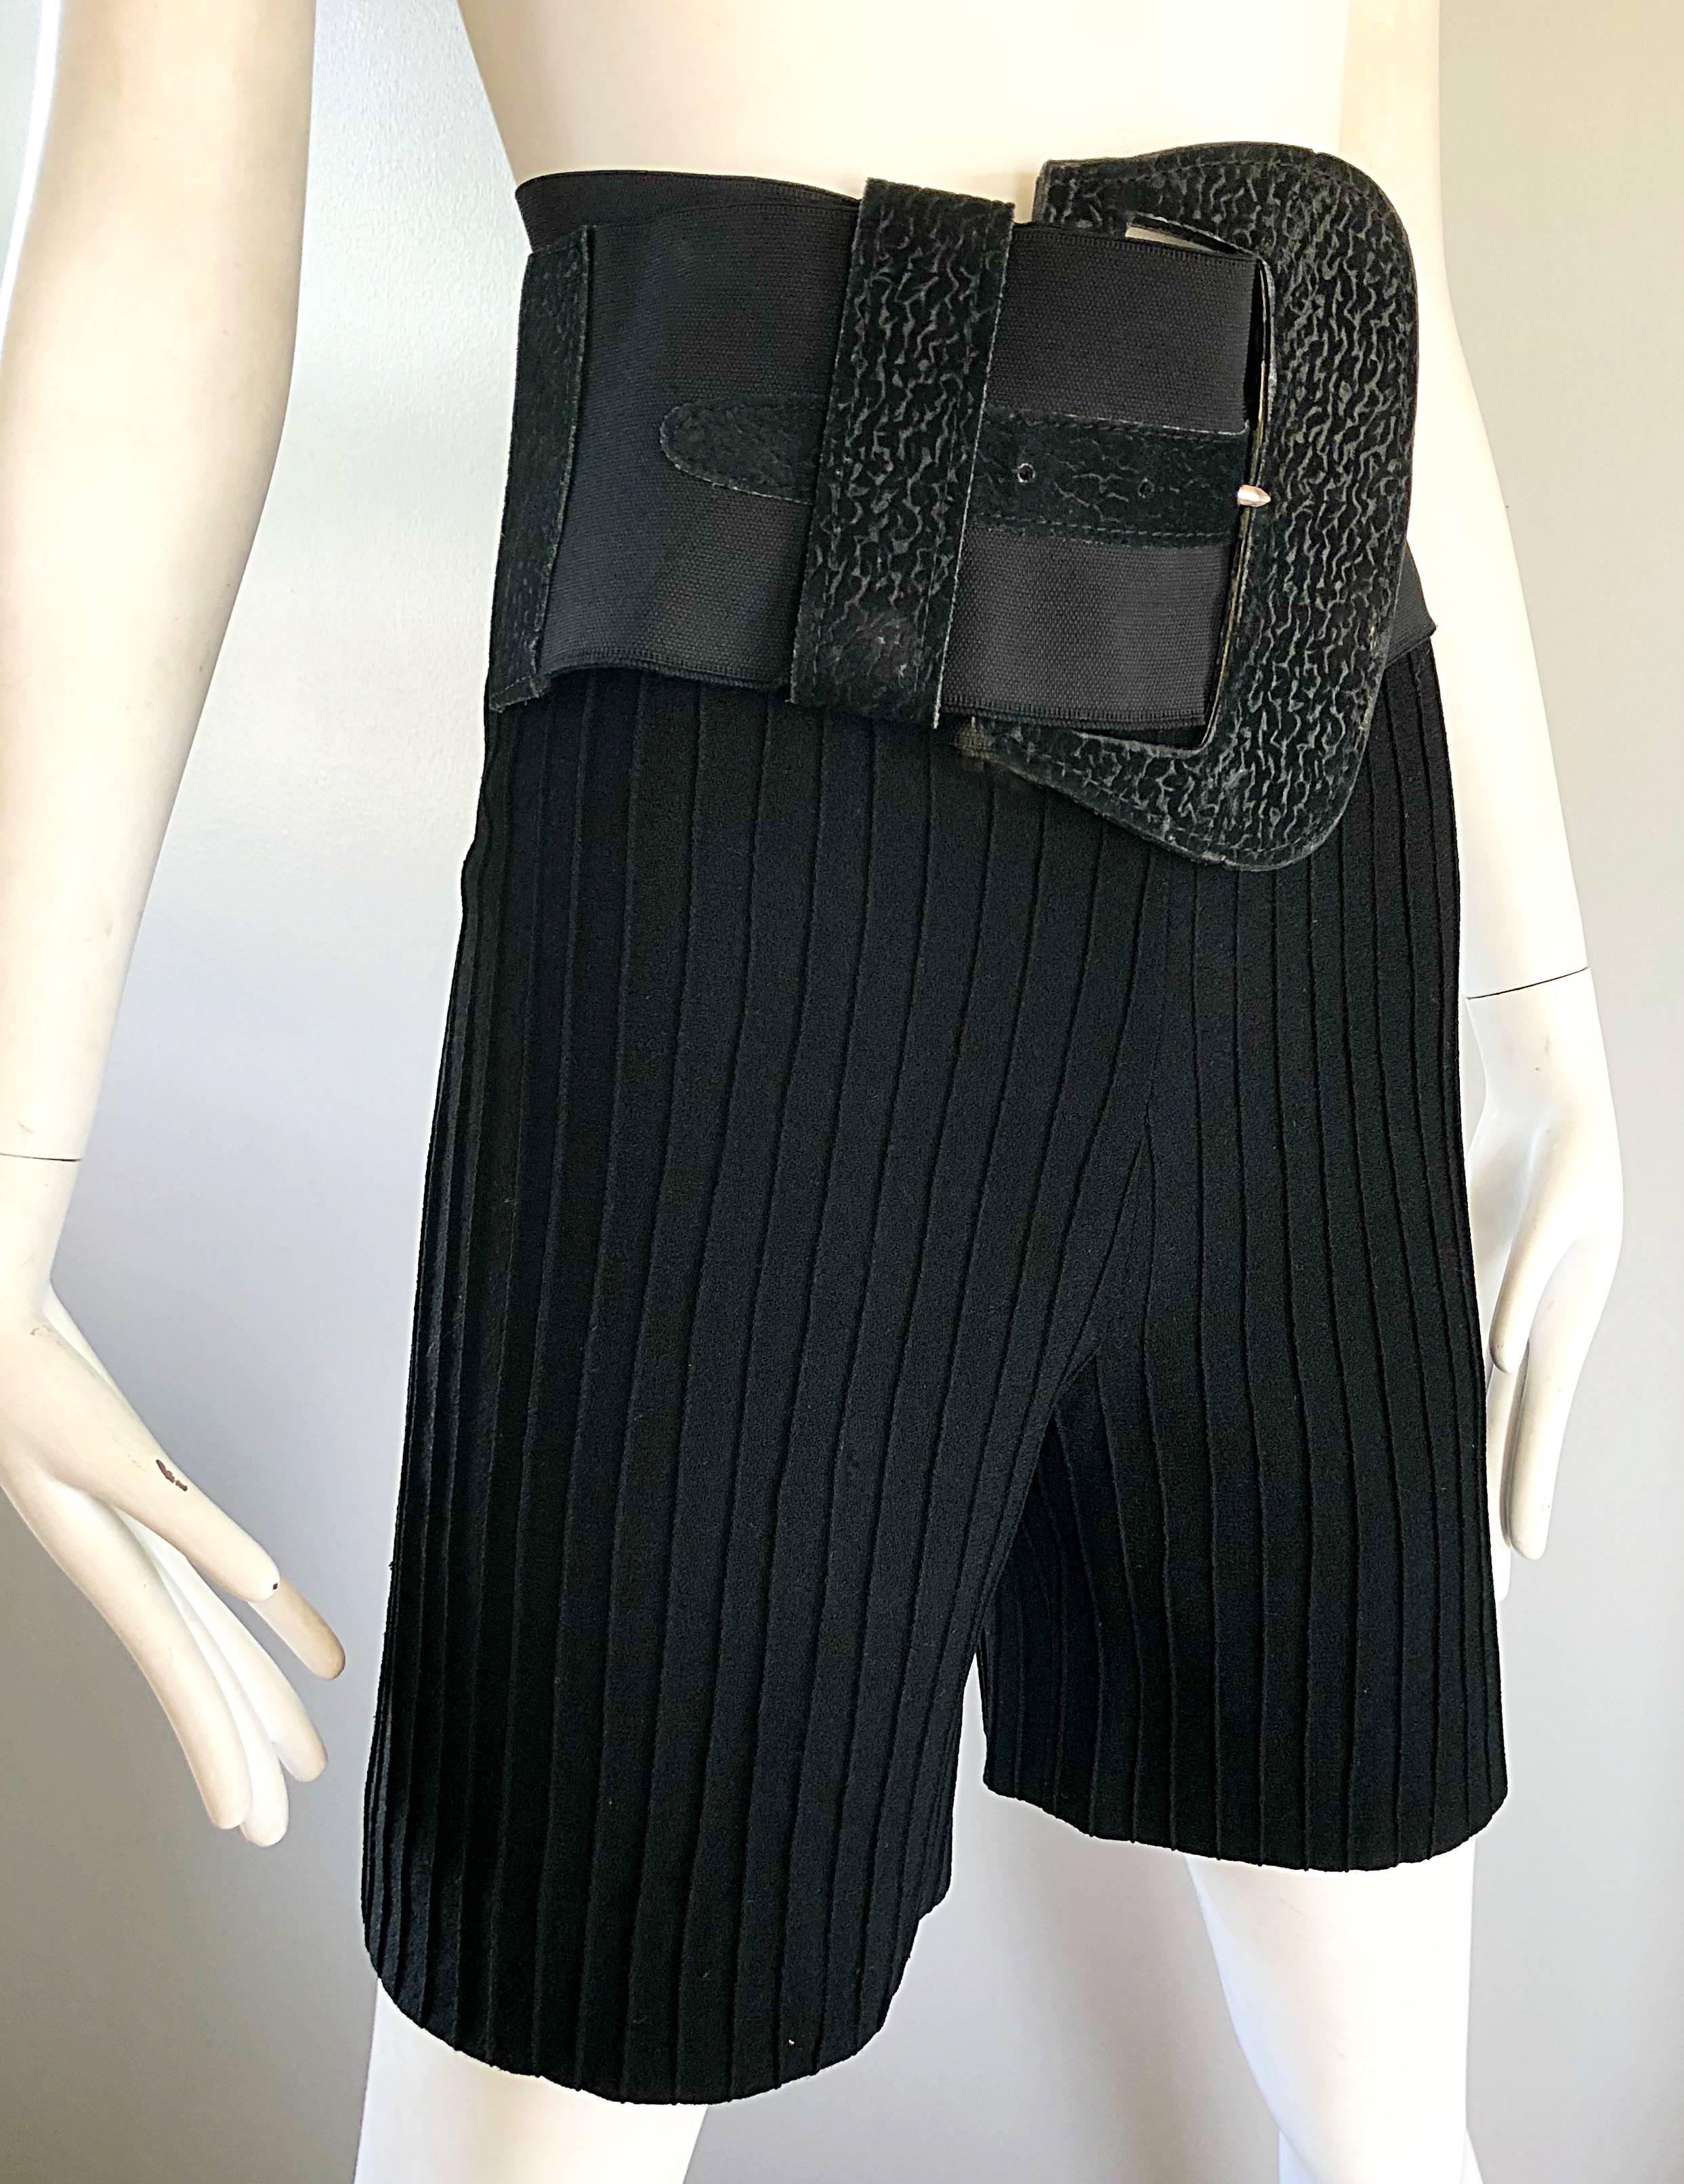 Cardinali Original Sample Black Wool High Waisted 1960s Shorts and Belt Set For Sale 3